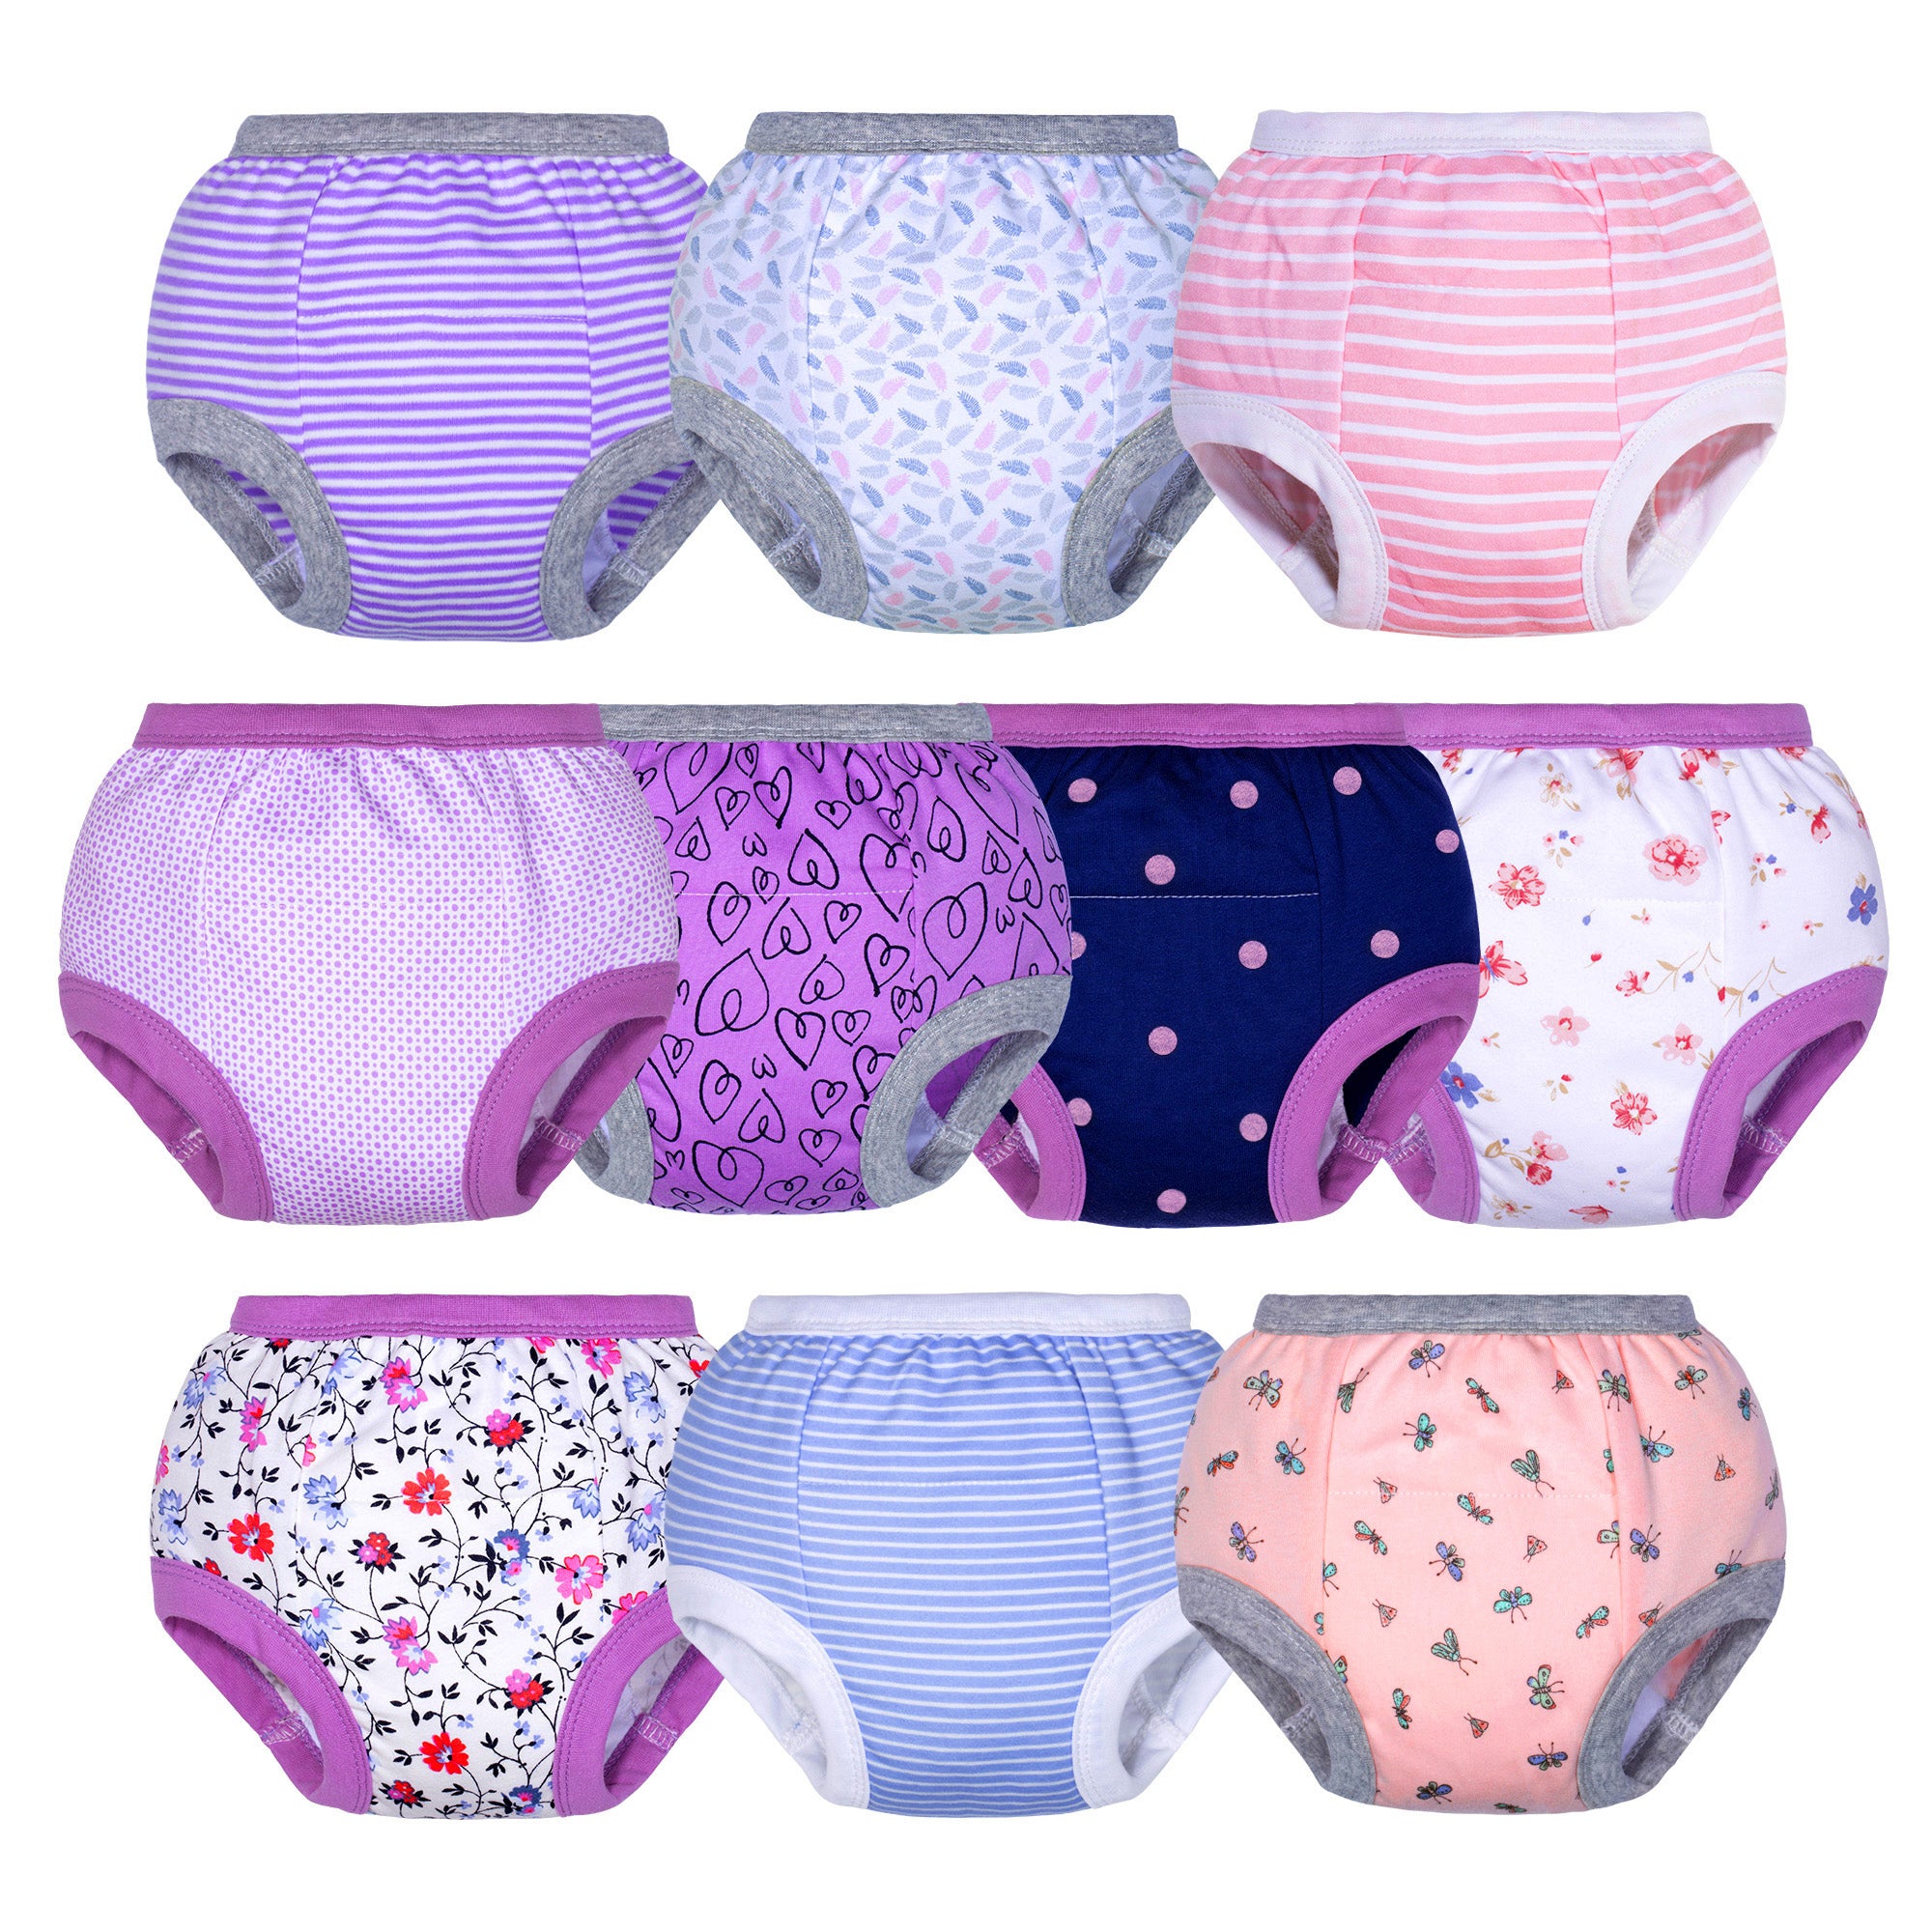  BIG ELEPHANT Baby Girls Training Underwear, Toddler